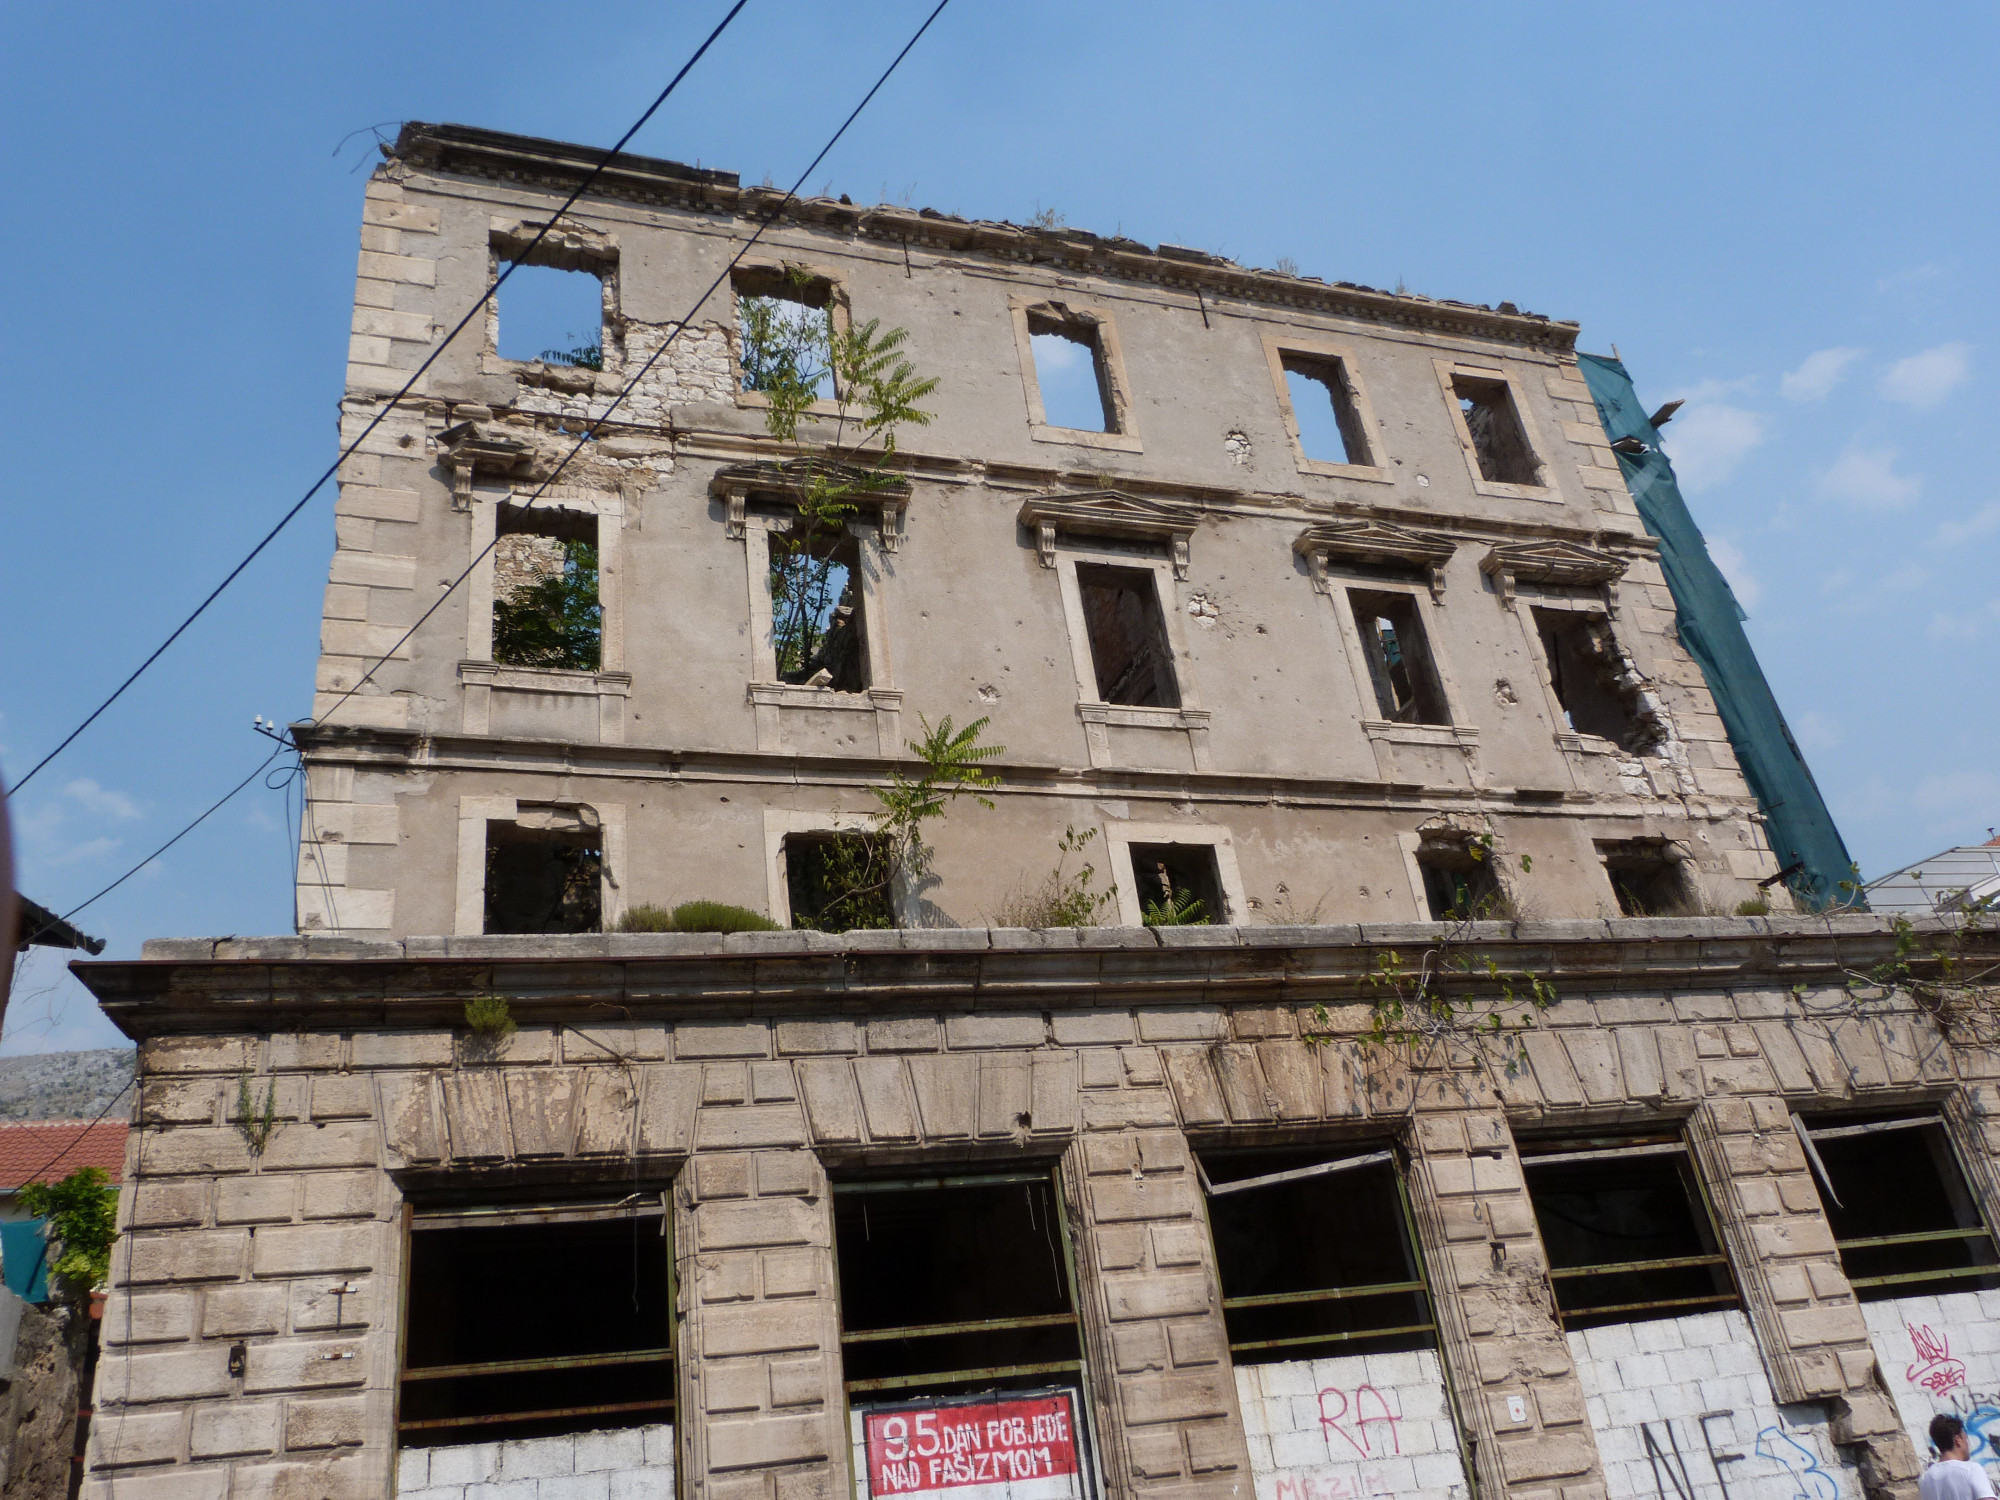 Bullet damaged building from Ruins from the Croat–Bosniak War